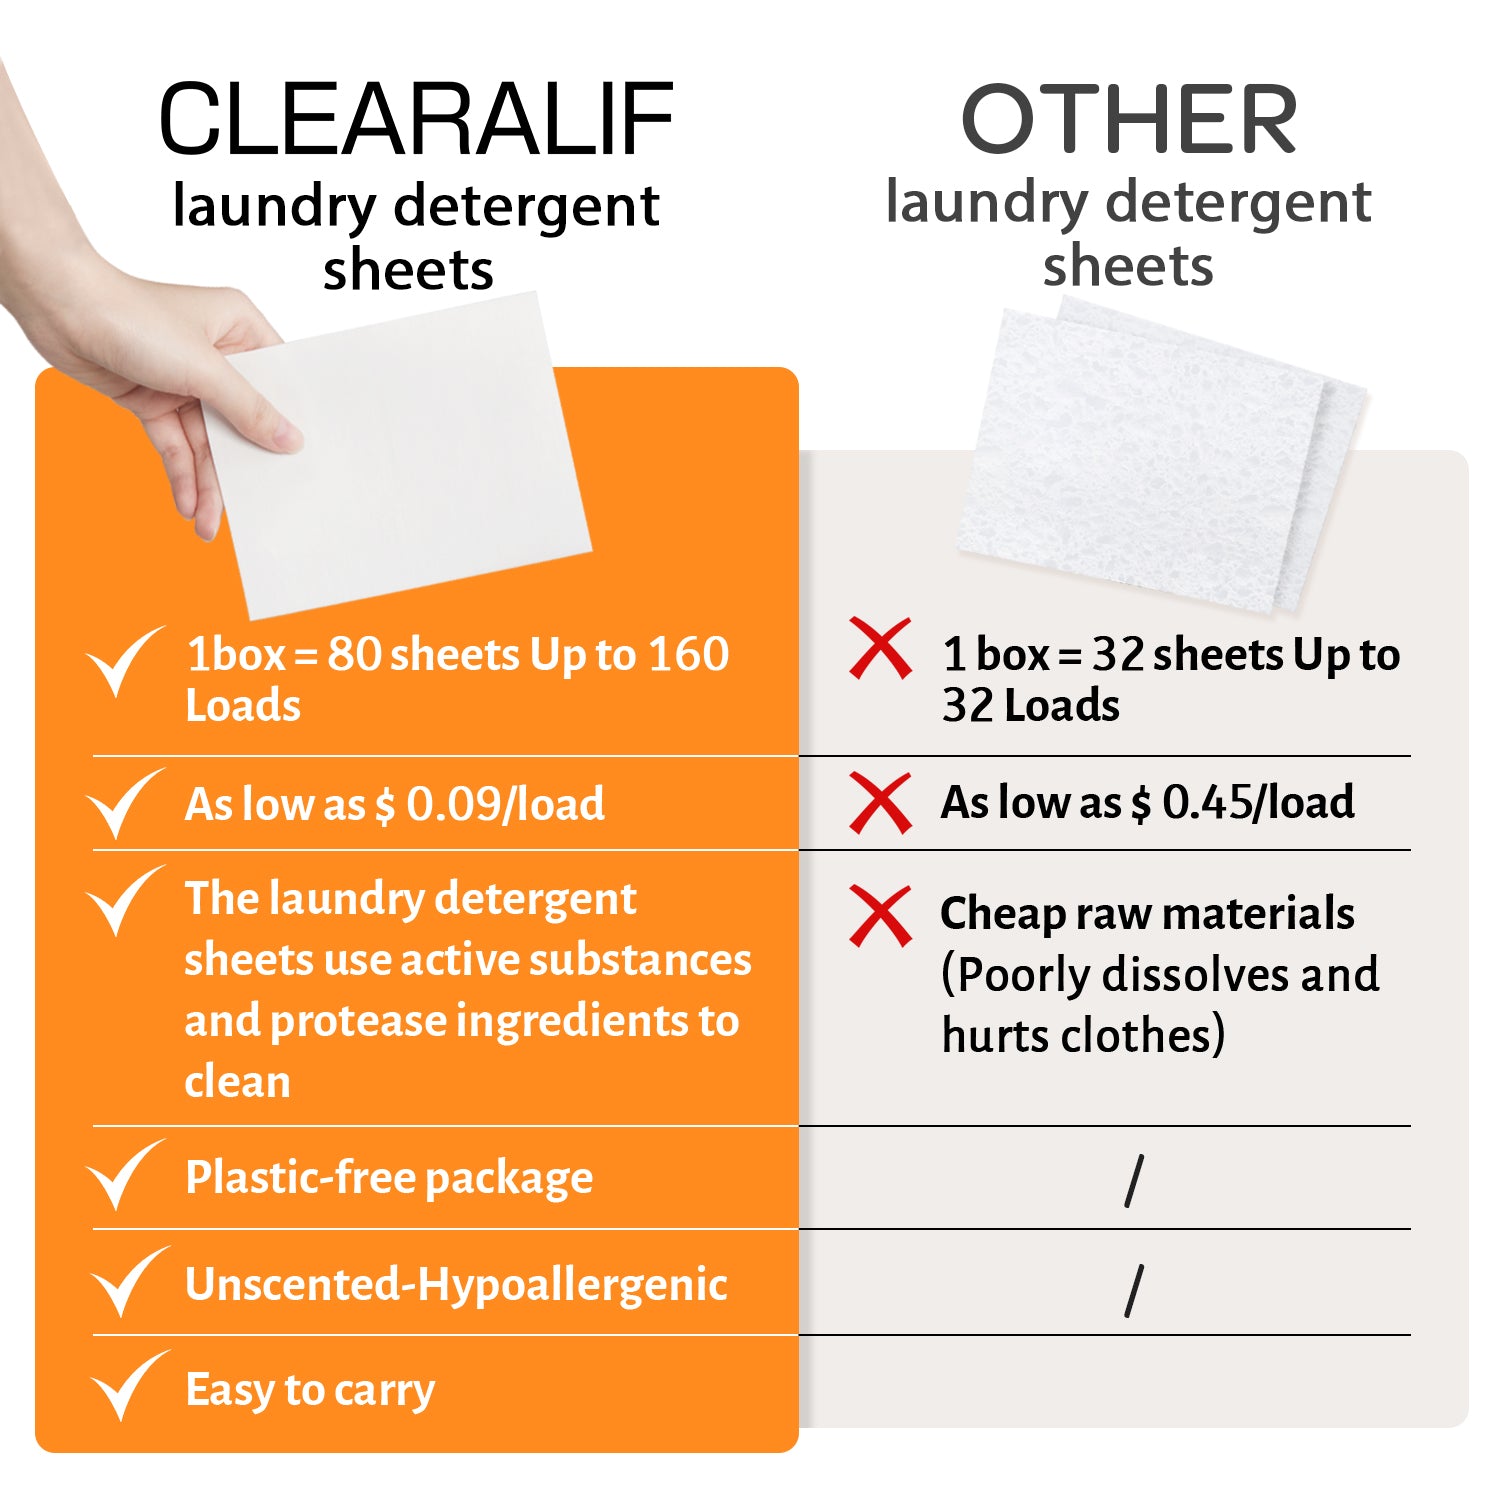 CLEARALIF Eco Friendly & Hypoallergenic Laundry Detergent Sheets 64 Loads, Sunshine Orange